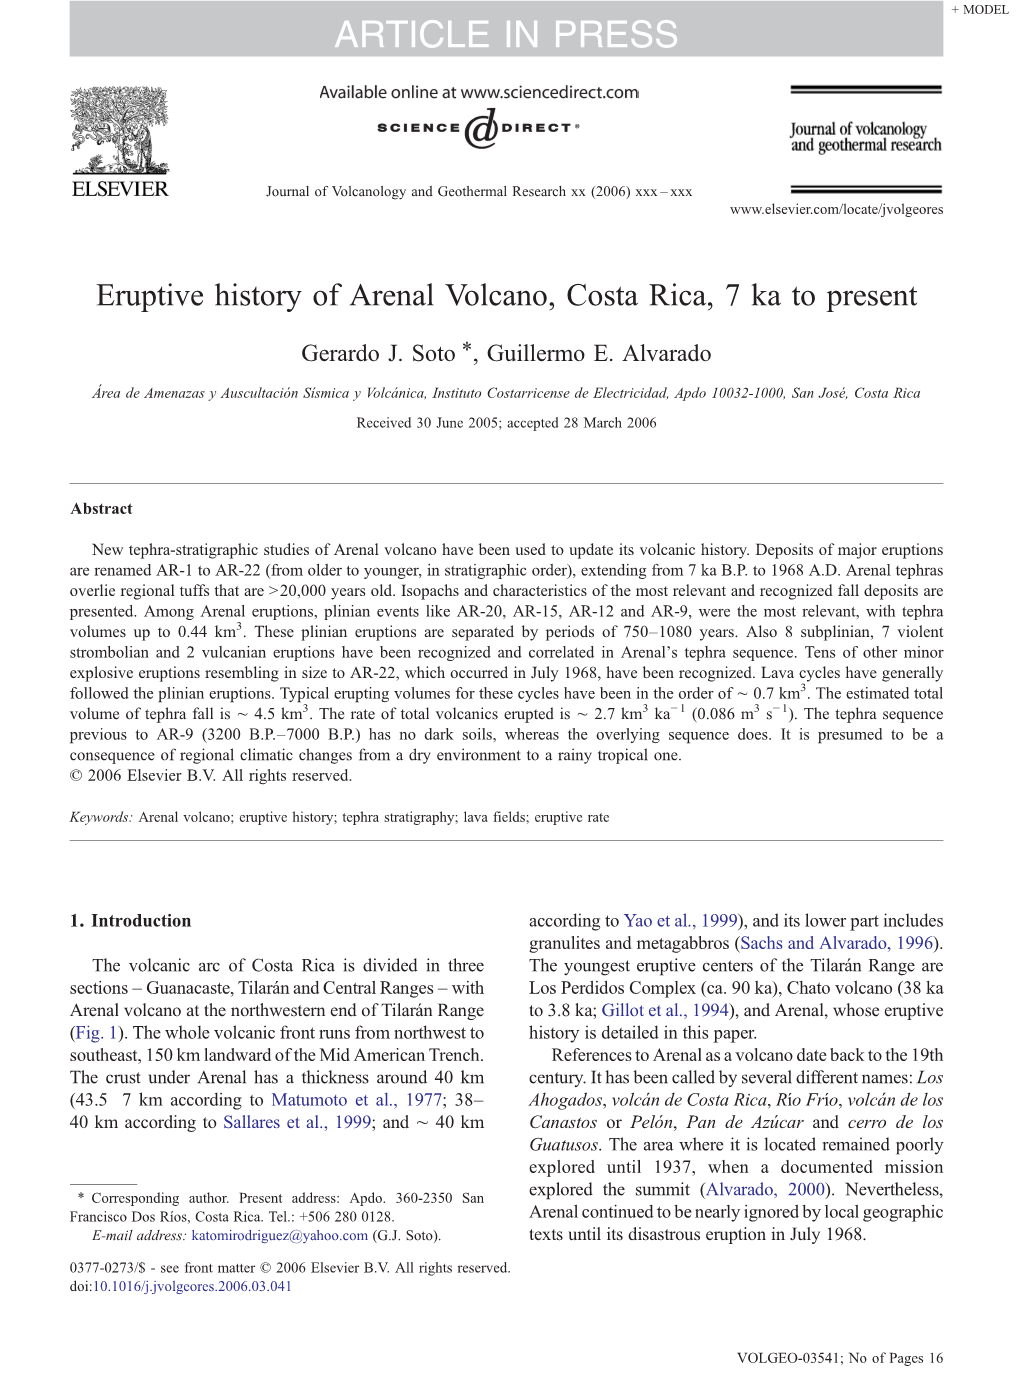 Eruptive History of Arenal Volcano, Costa Rica, 7 Ka to Present